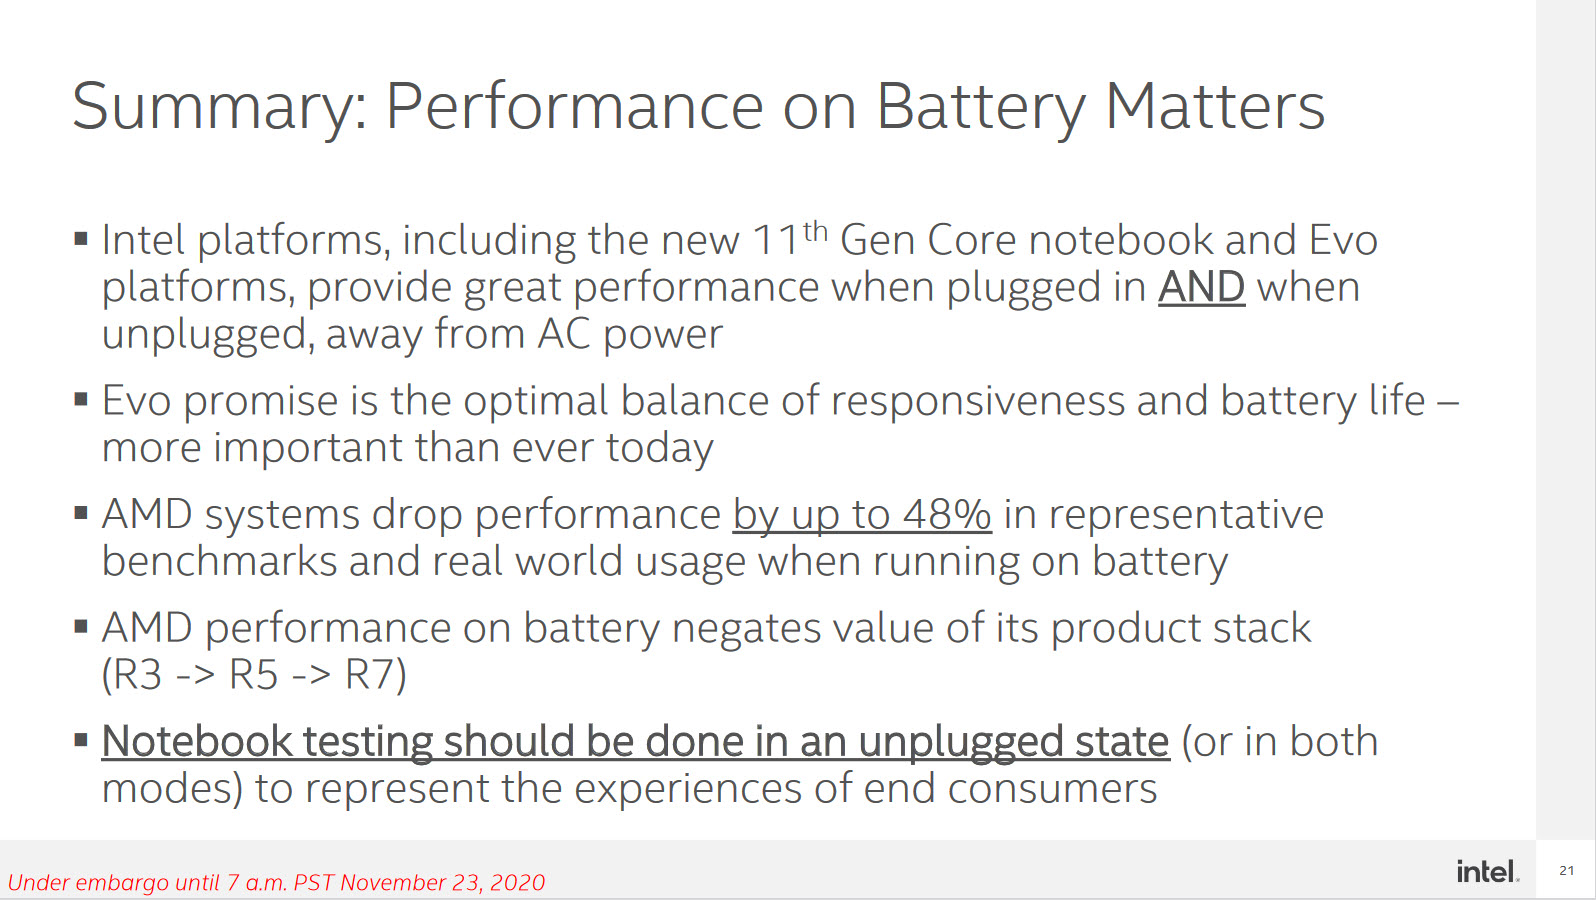 2020 11 24 19 57 32 Intel เปิดเผยซีพียู AMD ที่ใช้งานในแล็ปท็อปมีประสิทธิภาพลดลงเมื่อไม่ต่อไฟเลี้ยงในกรณีใช้งานกับแบตเตอรี่โดยตรง 